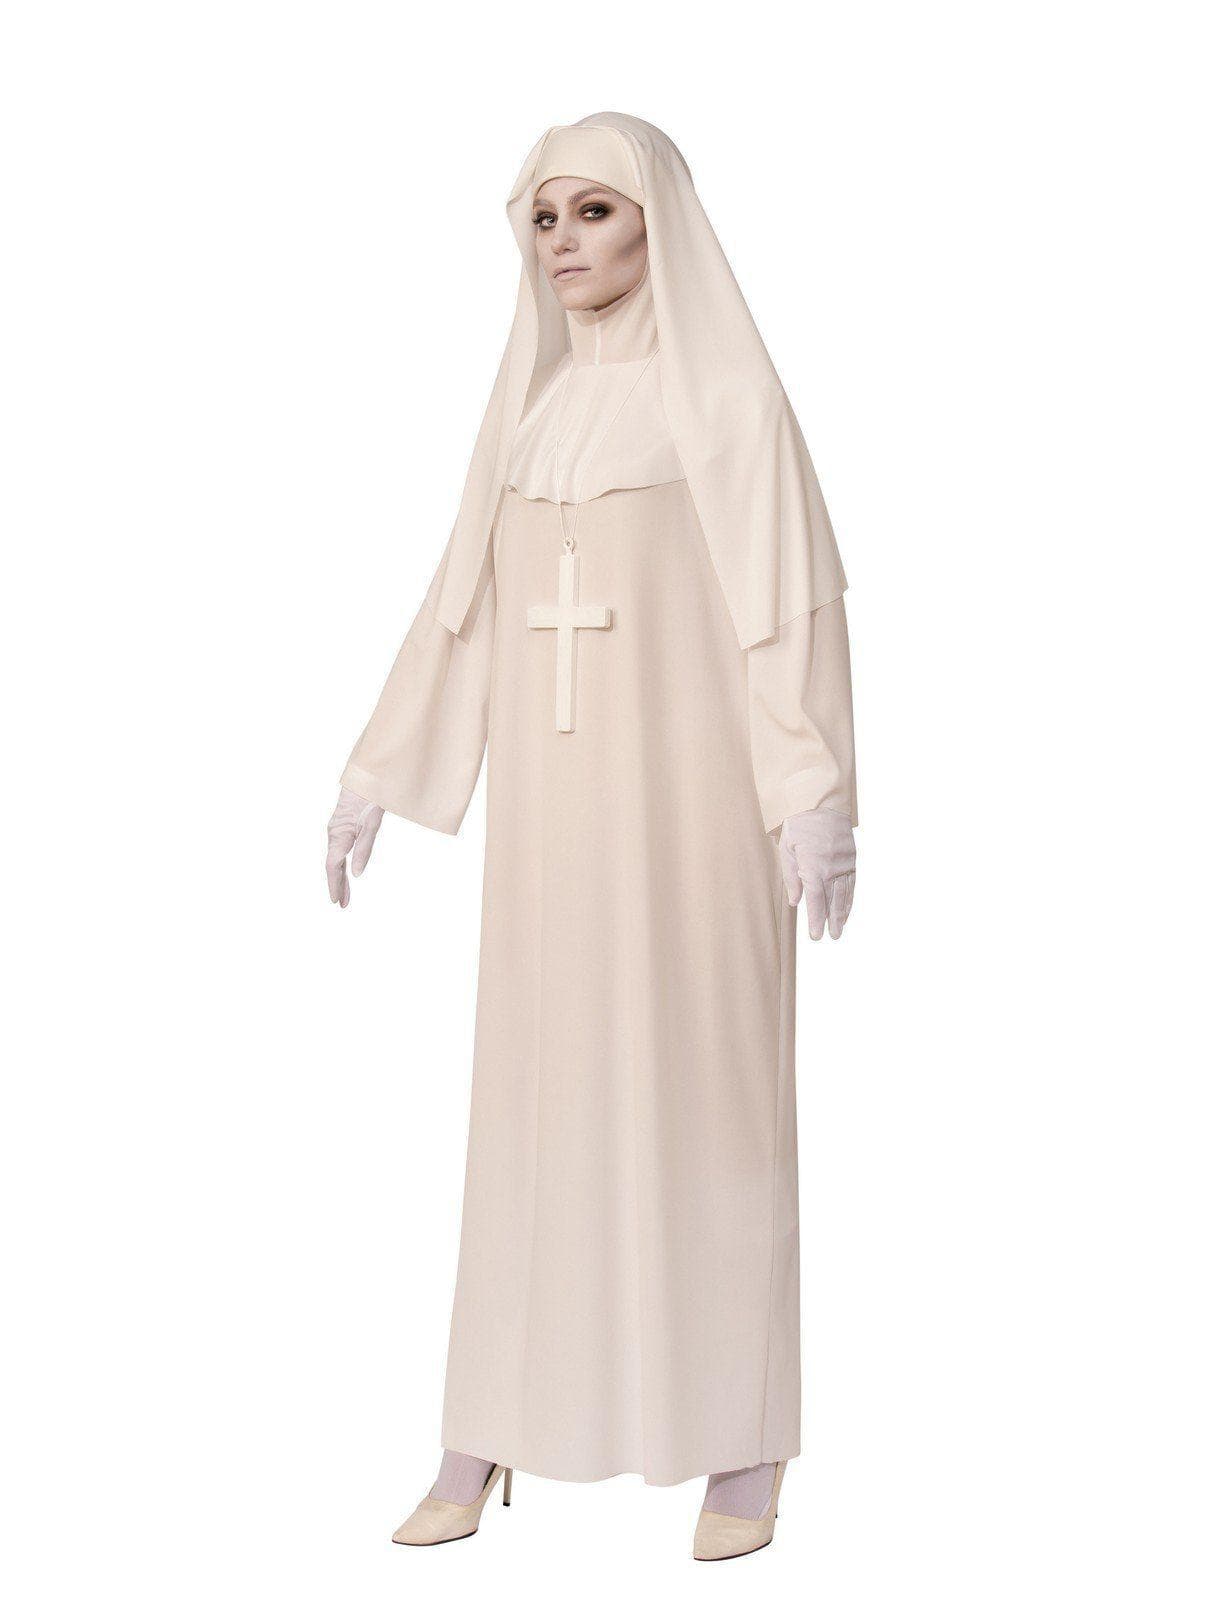 Adult White Nun Costume - costumes.com